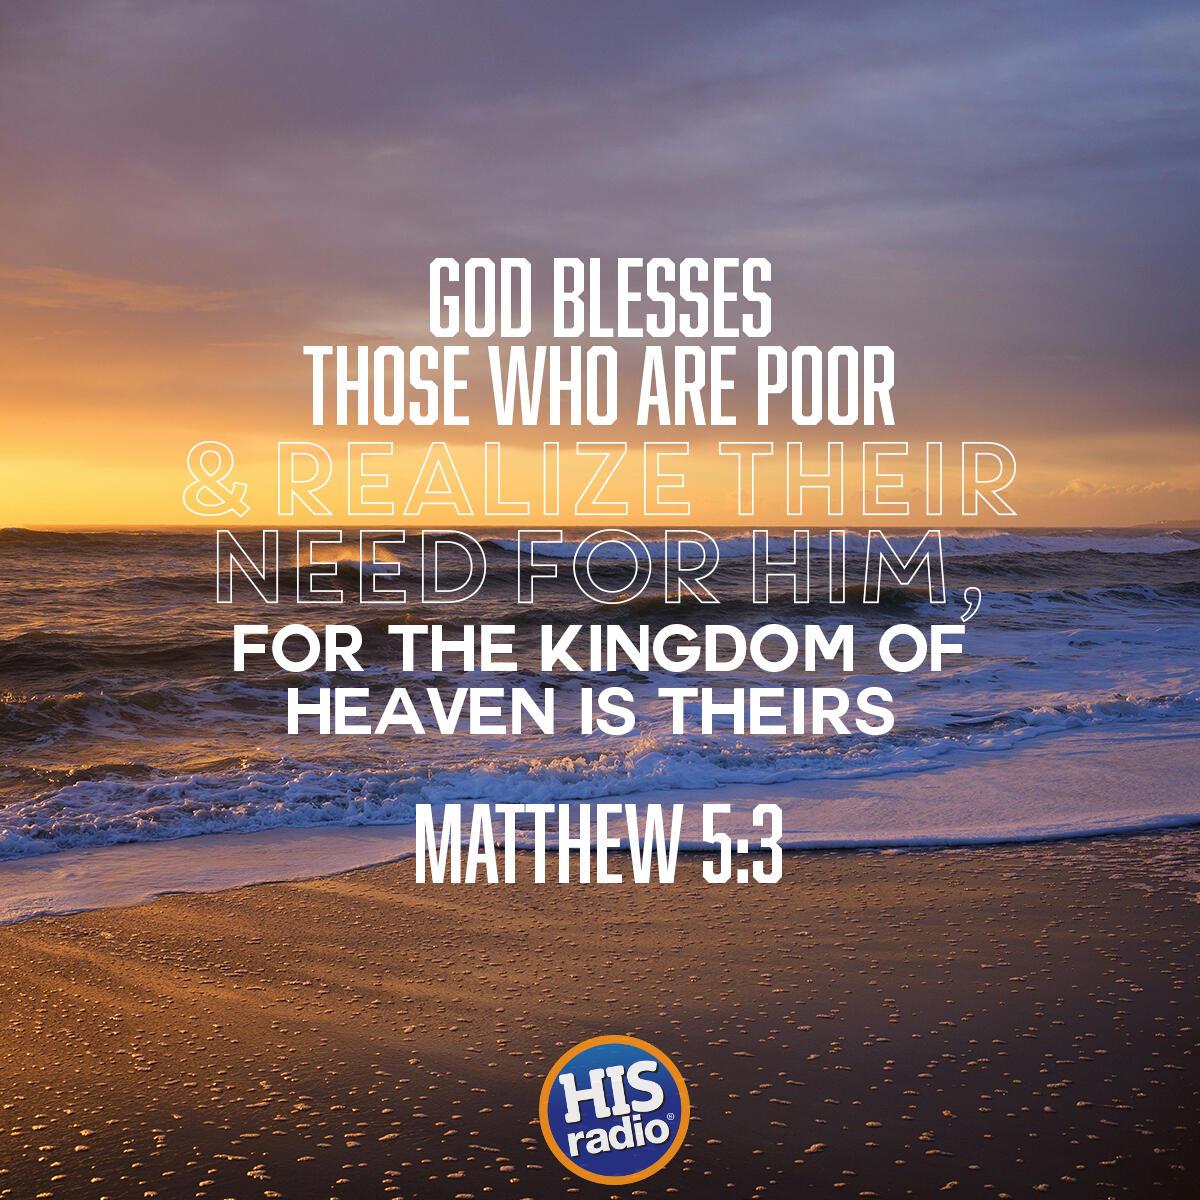 Matthew 5:3